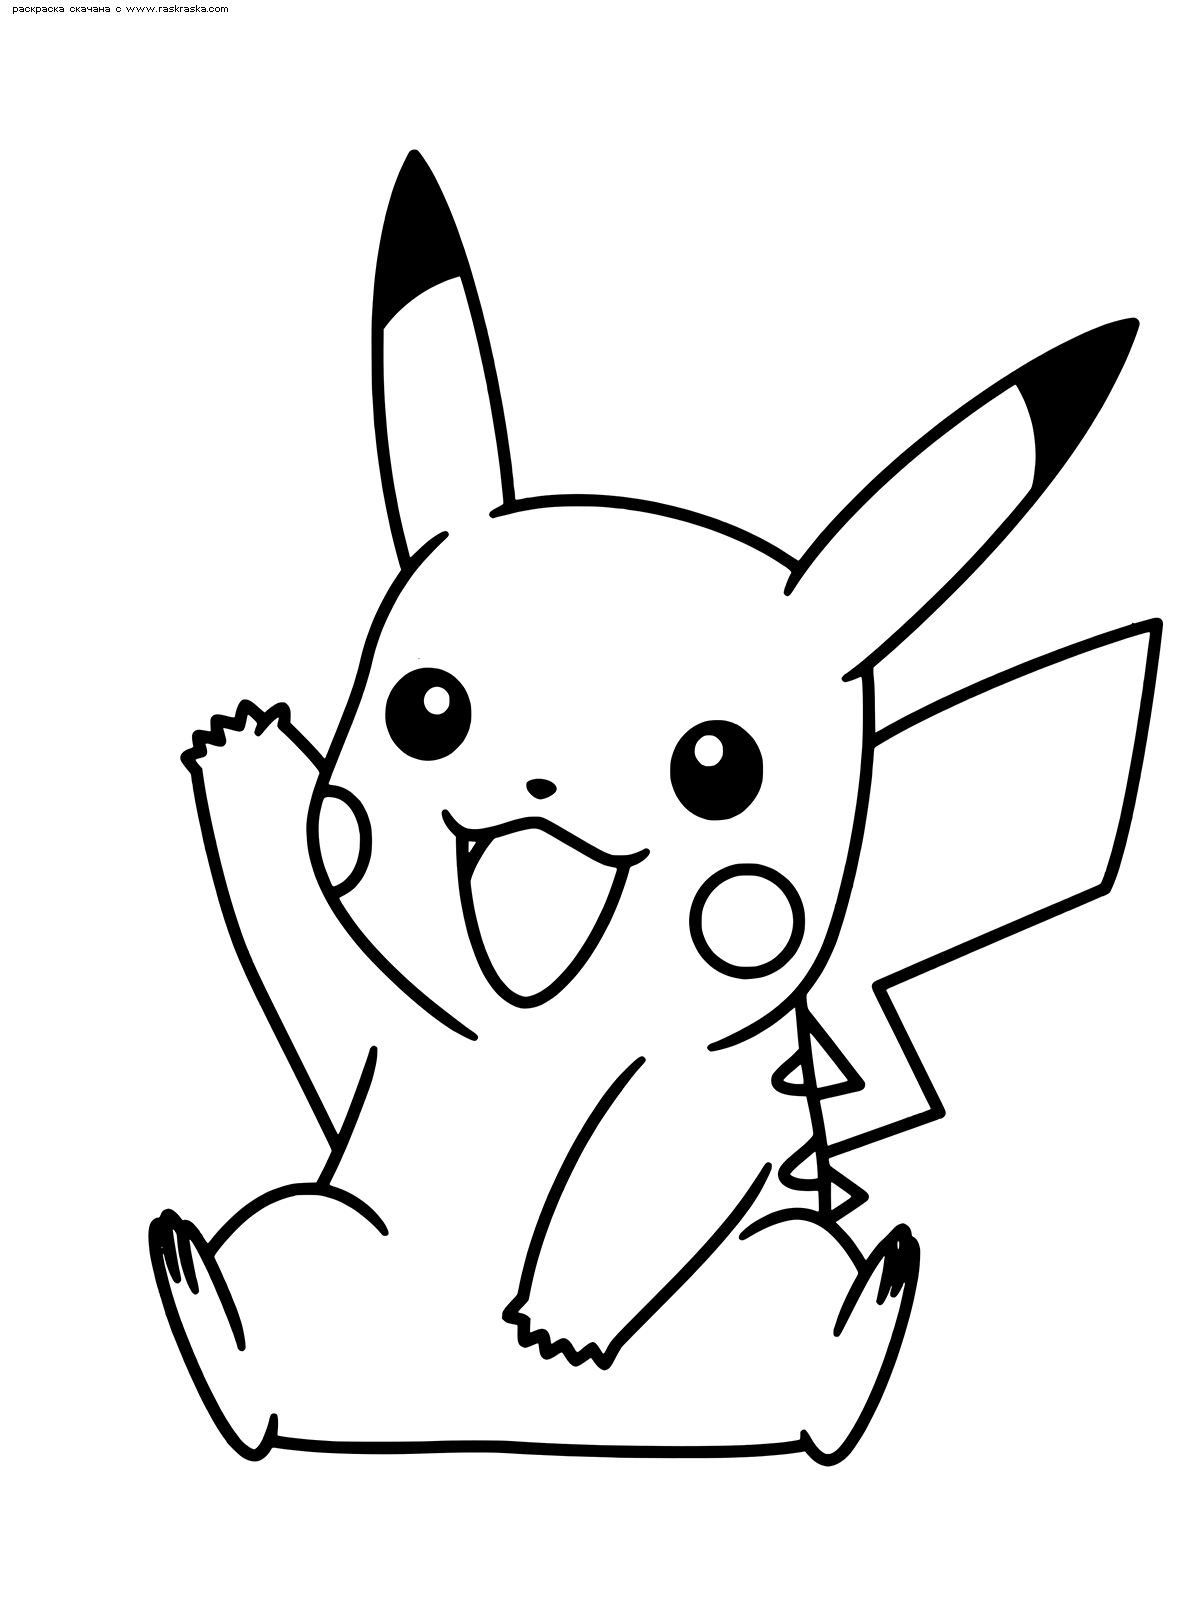 Dibujos De Pikachu Para Colorear Colorear Tus Dibujos